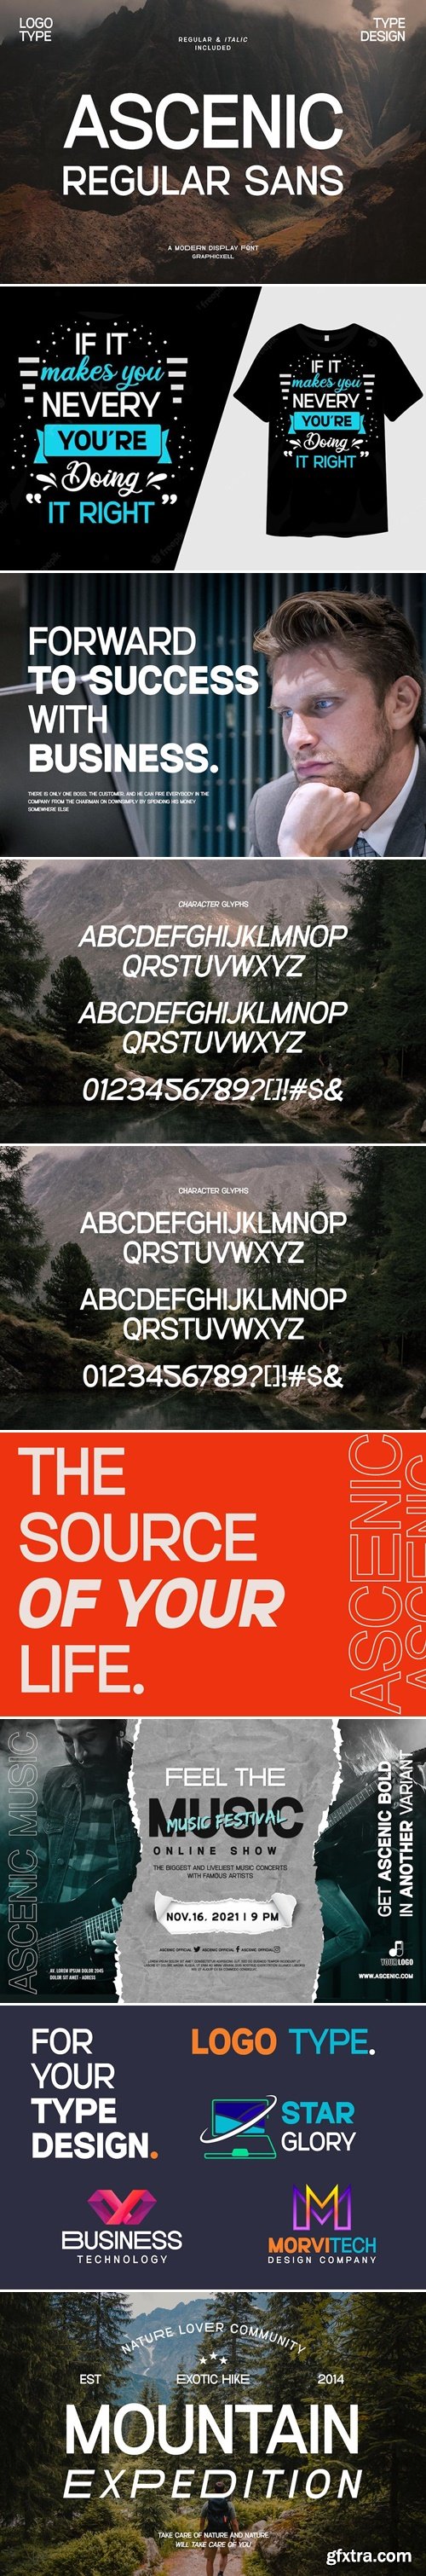 Ascenic Regular Sans Font Typeface